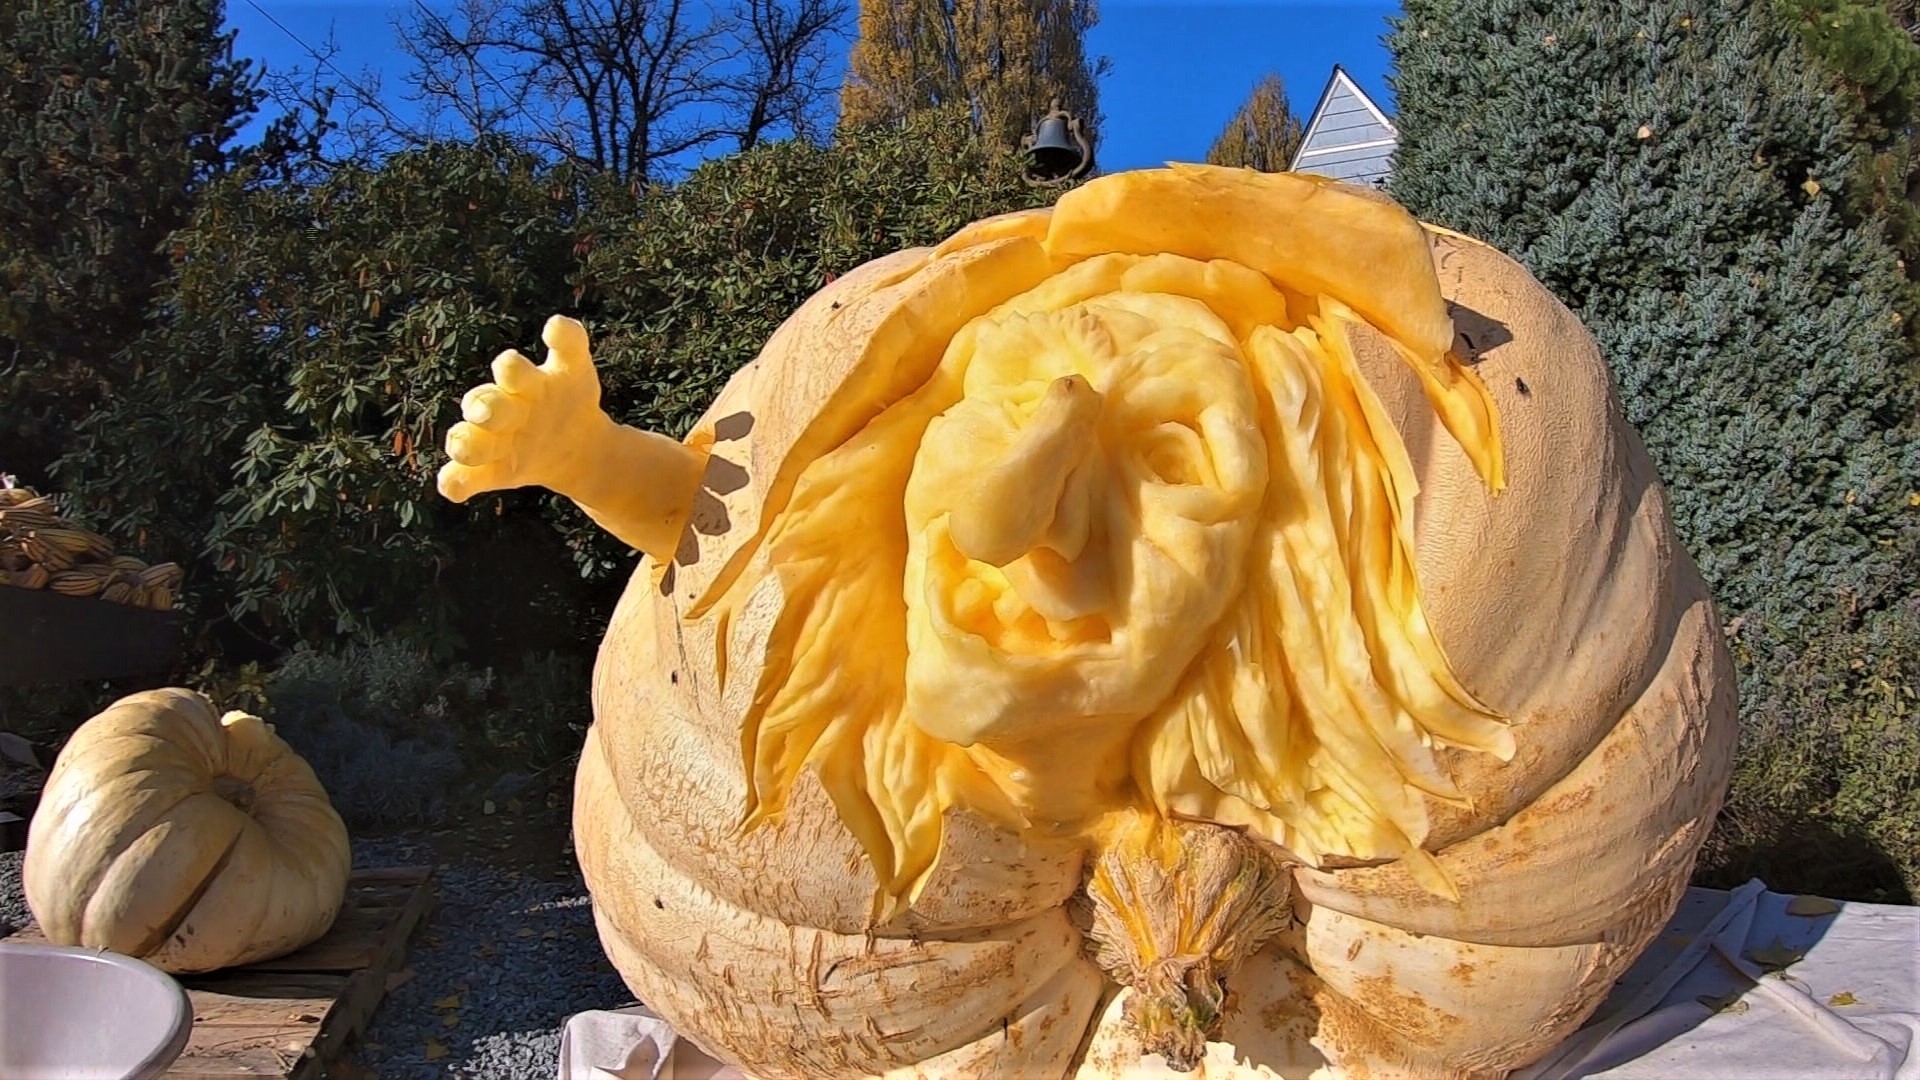 Celebrity pumpkin carver Pam Leno visited Gordon Skagit Farms to carve a 424 lb pumpkin